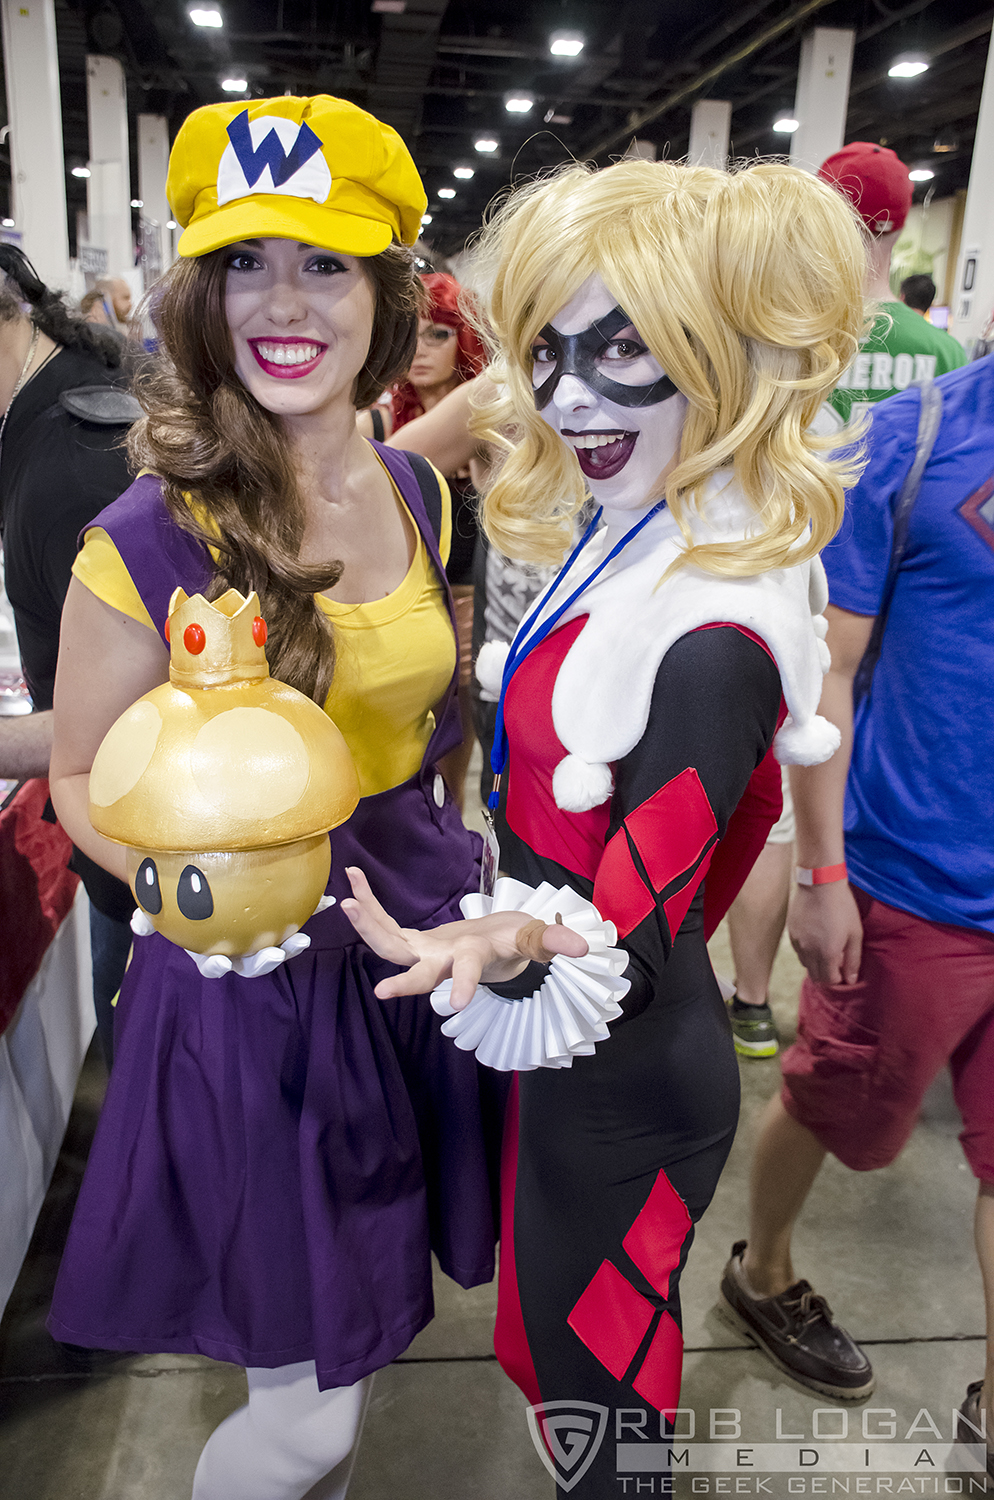 Boston Comic Con 2015 cosplay photo gallery - The Geek Generation